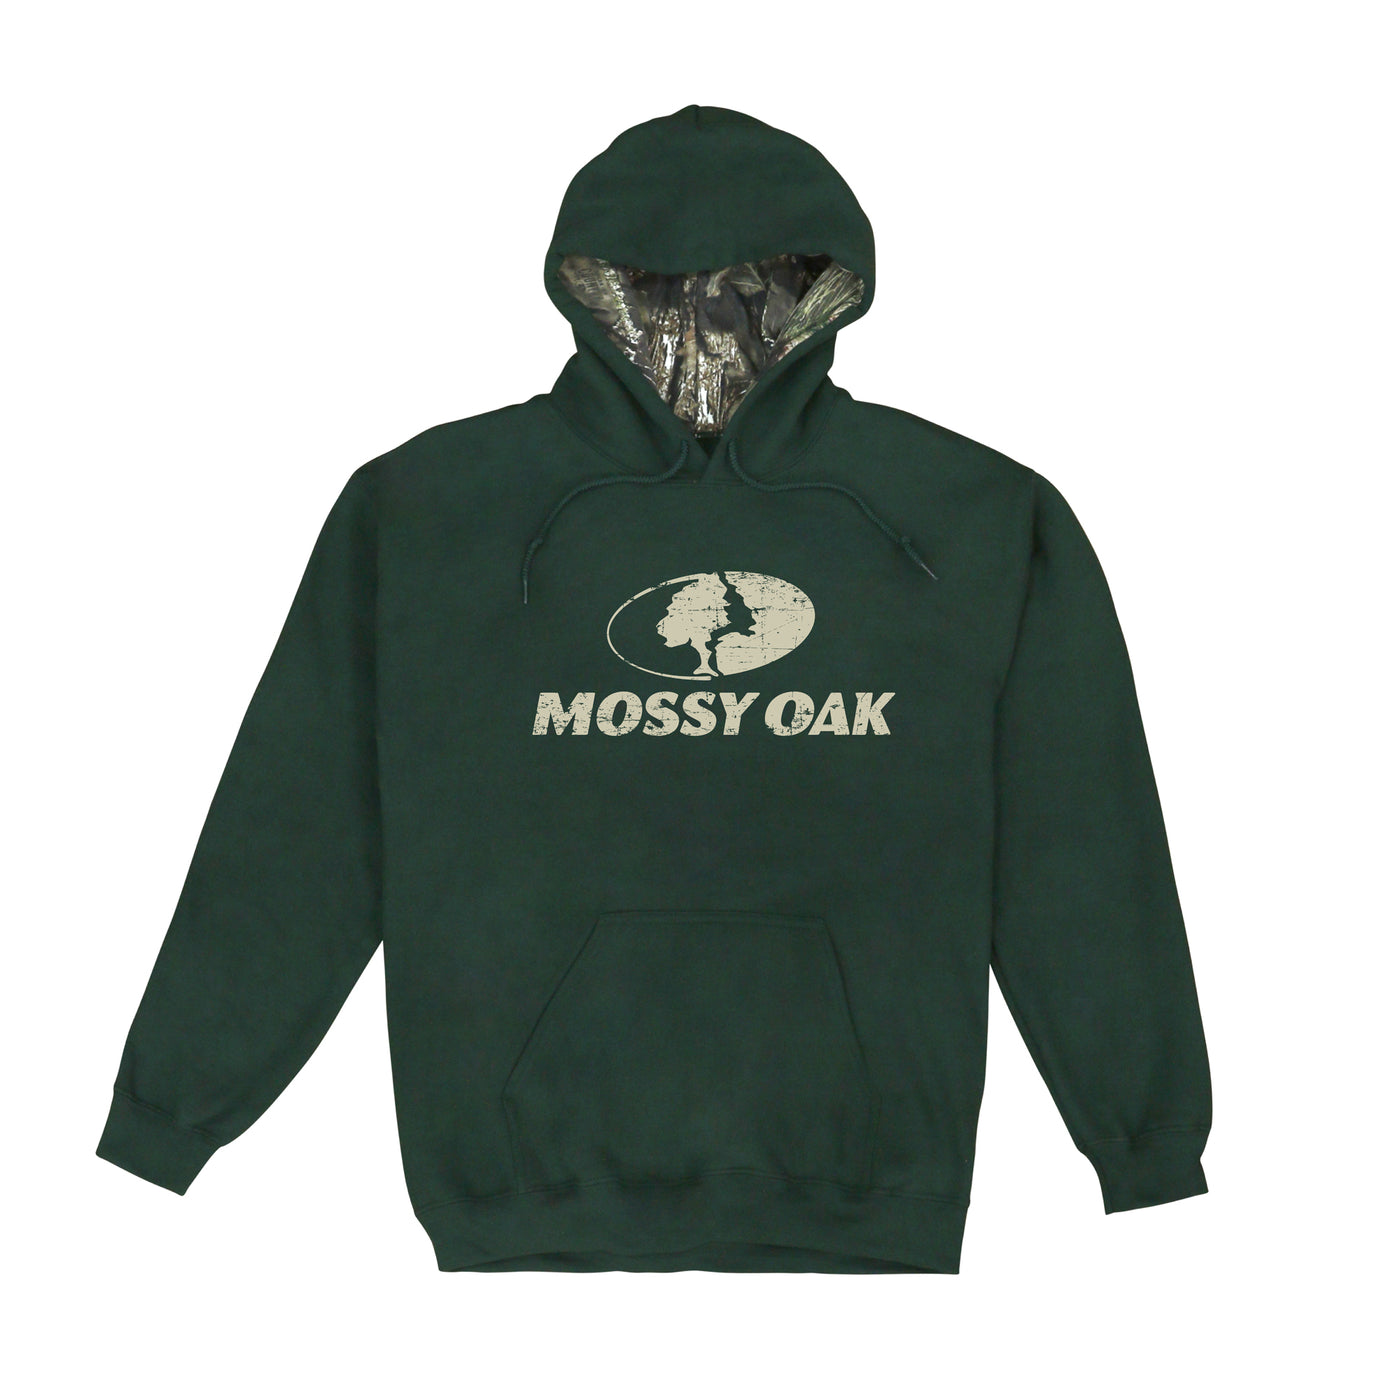 Mossy Oak Brand Hoodie